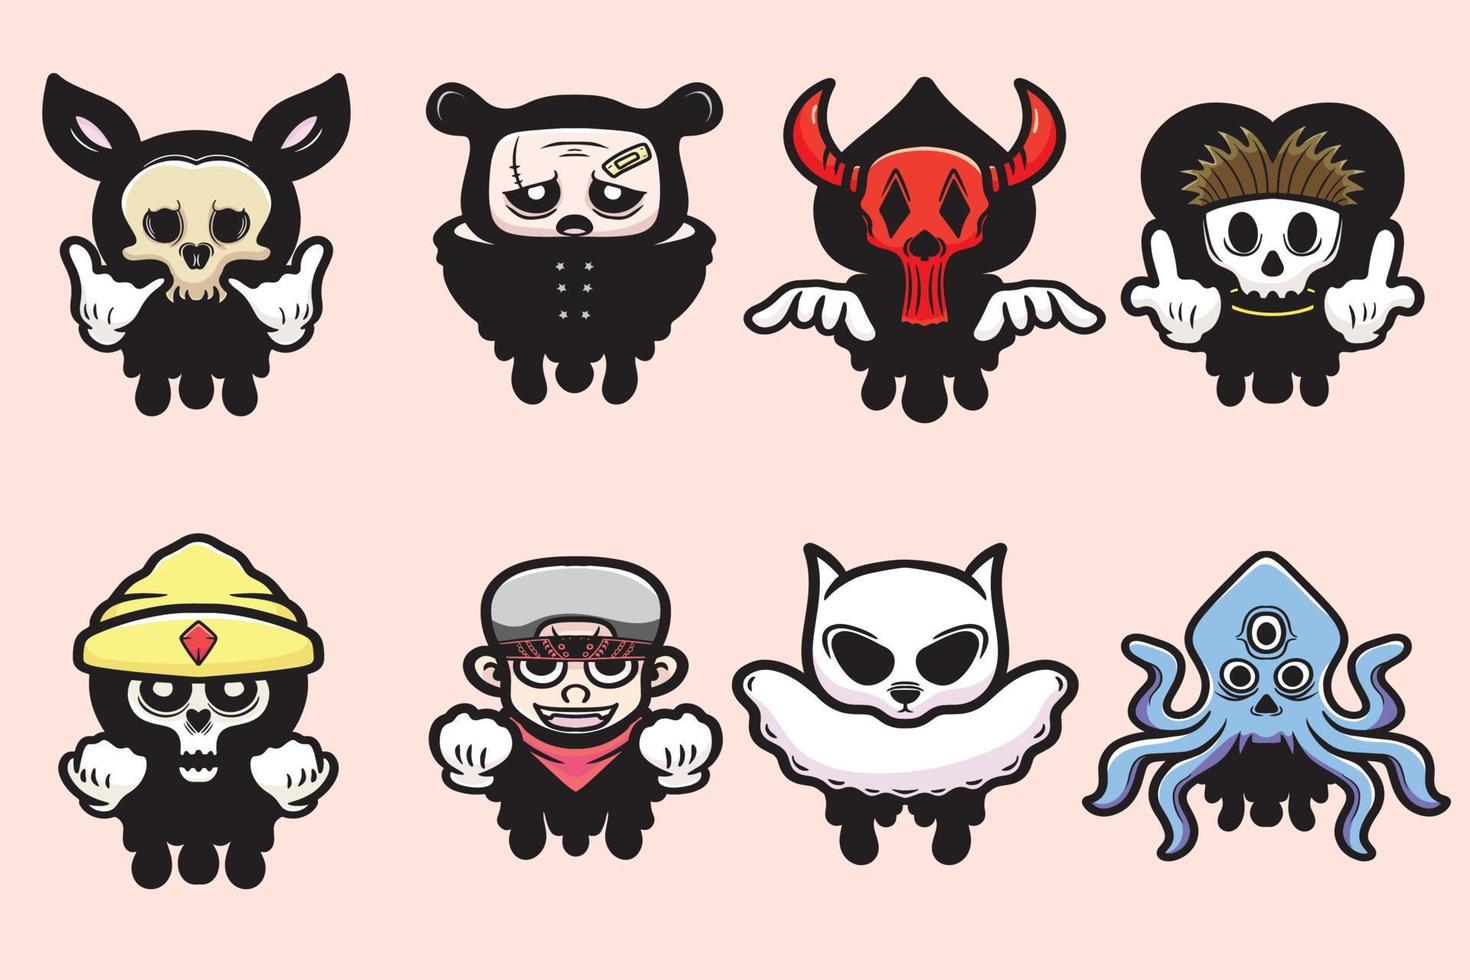 Cute Monster And Animals Mascot Cartoon Vector Set Bundle